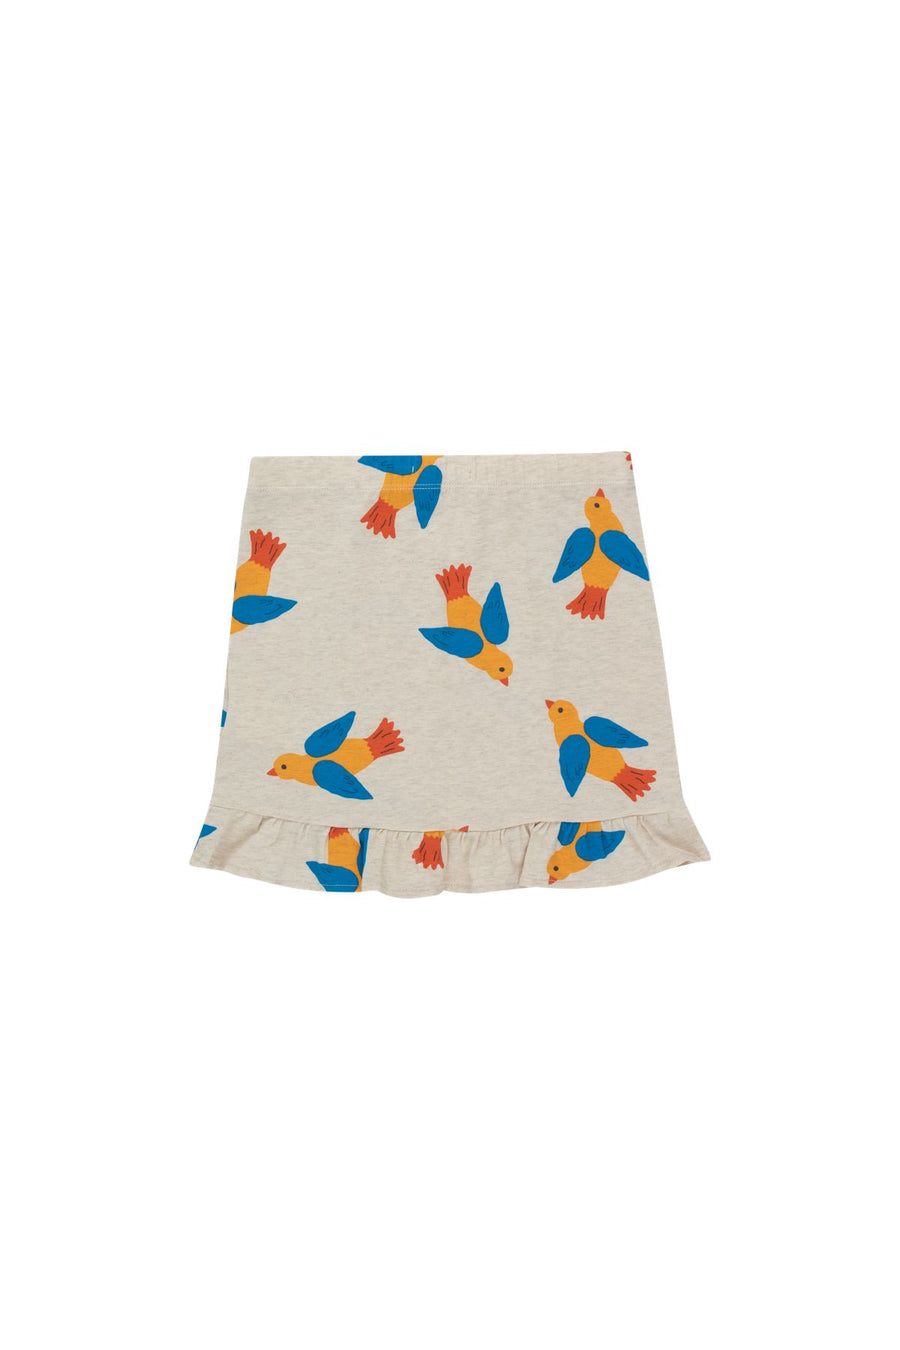 Tiny Cottons - birds skirt - light cream heather